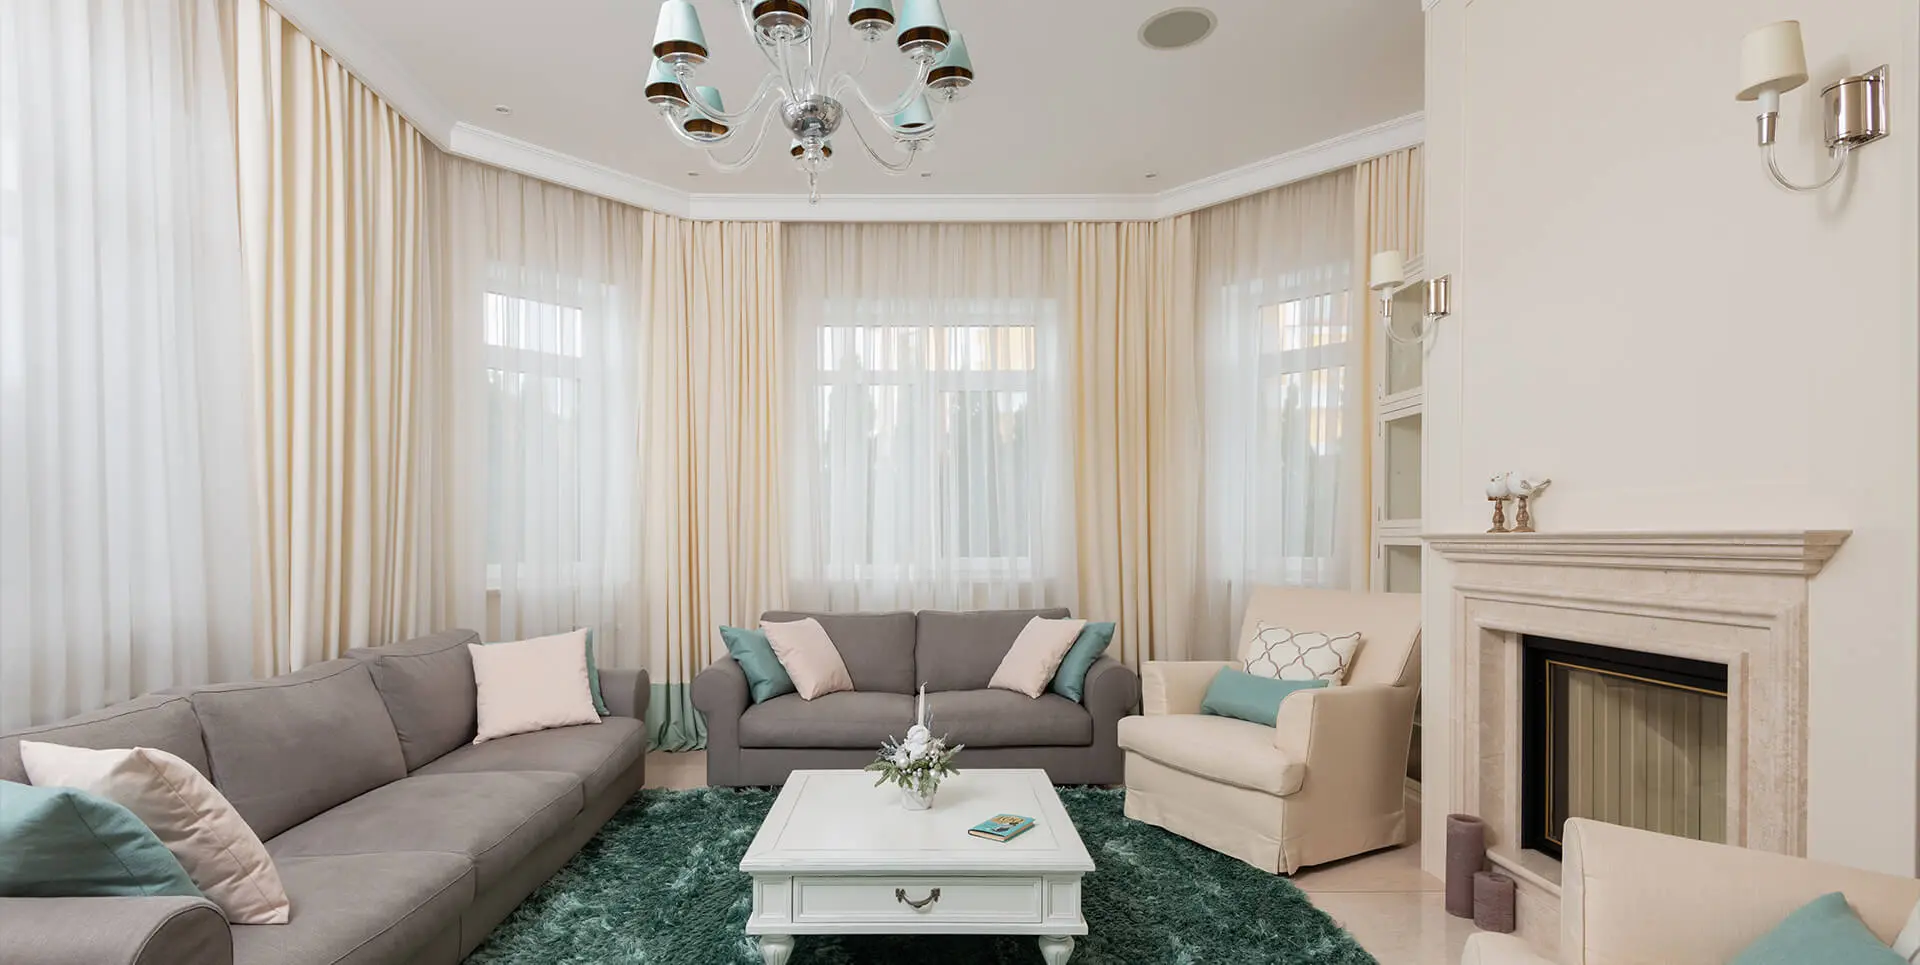 Luxury living room interior